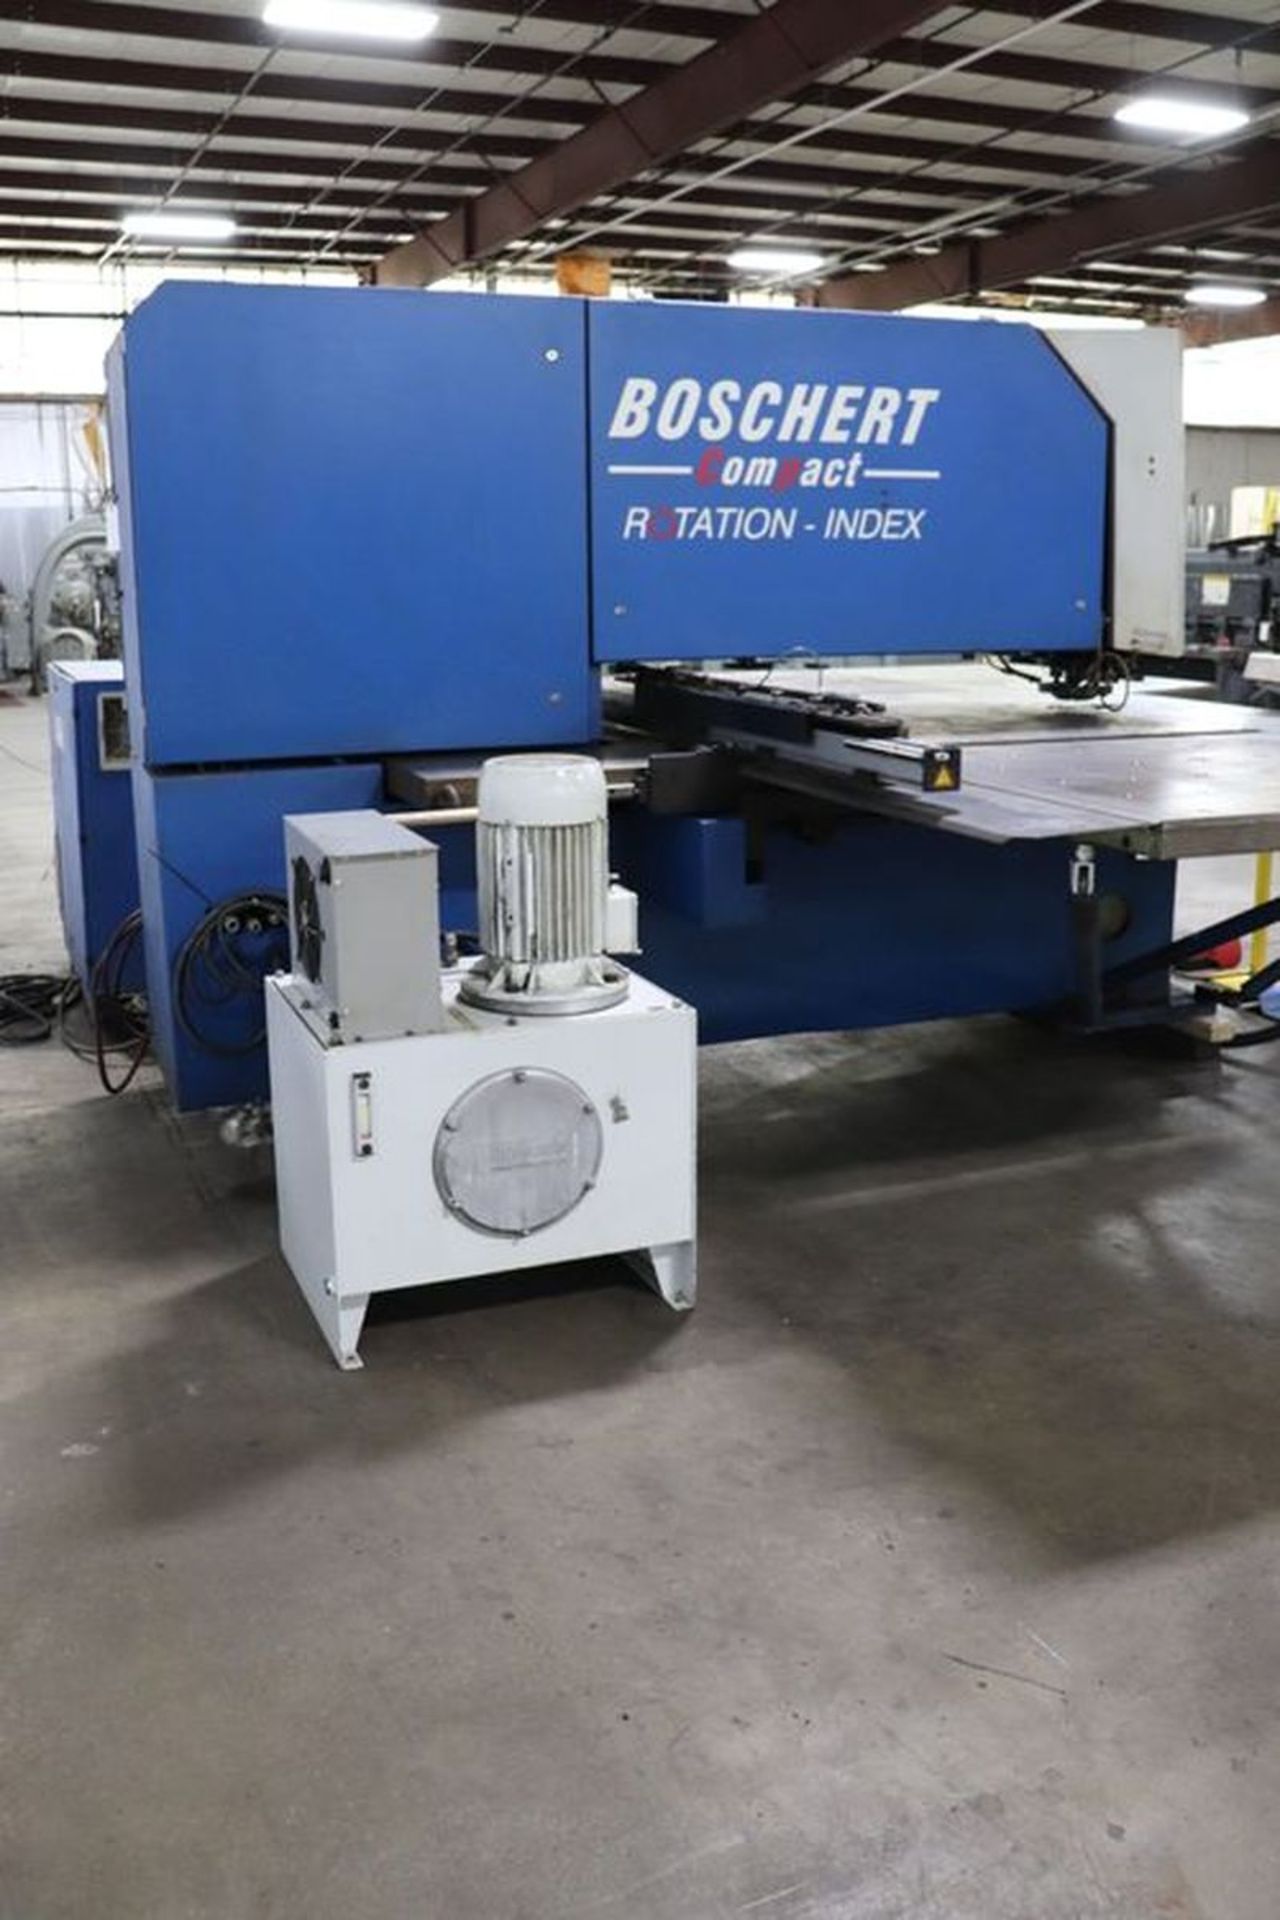 Boschert Compact 1250 Rotation-Index 36 Ton CNC Punching Machine - Image 13 of 18